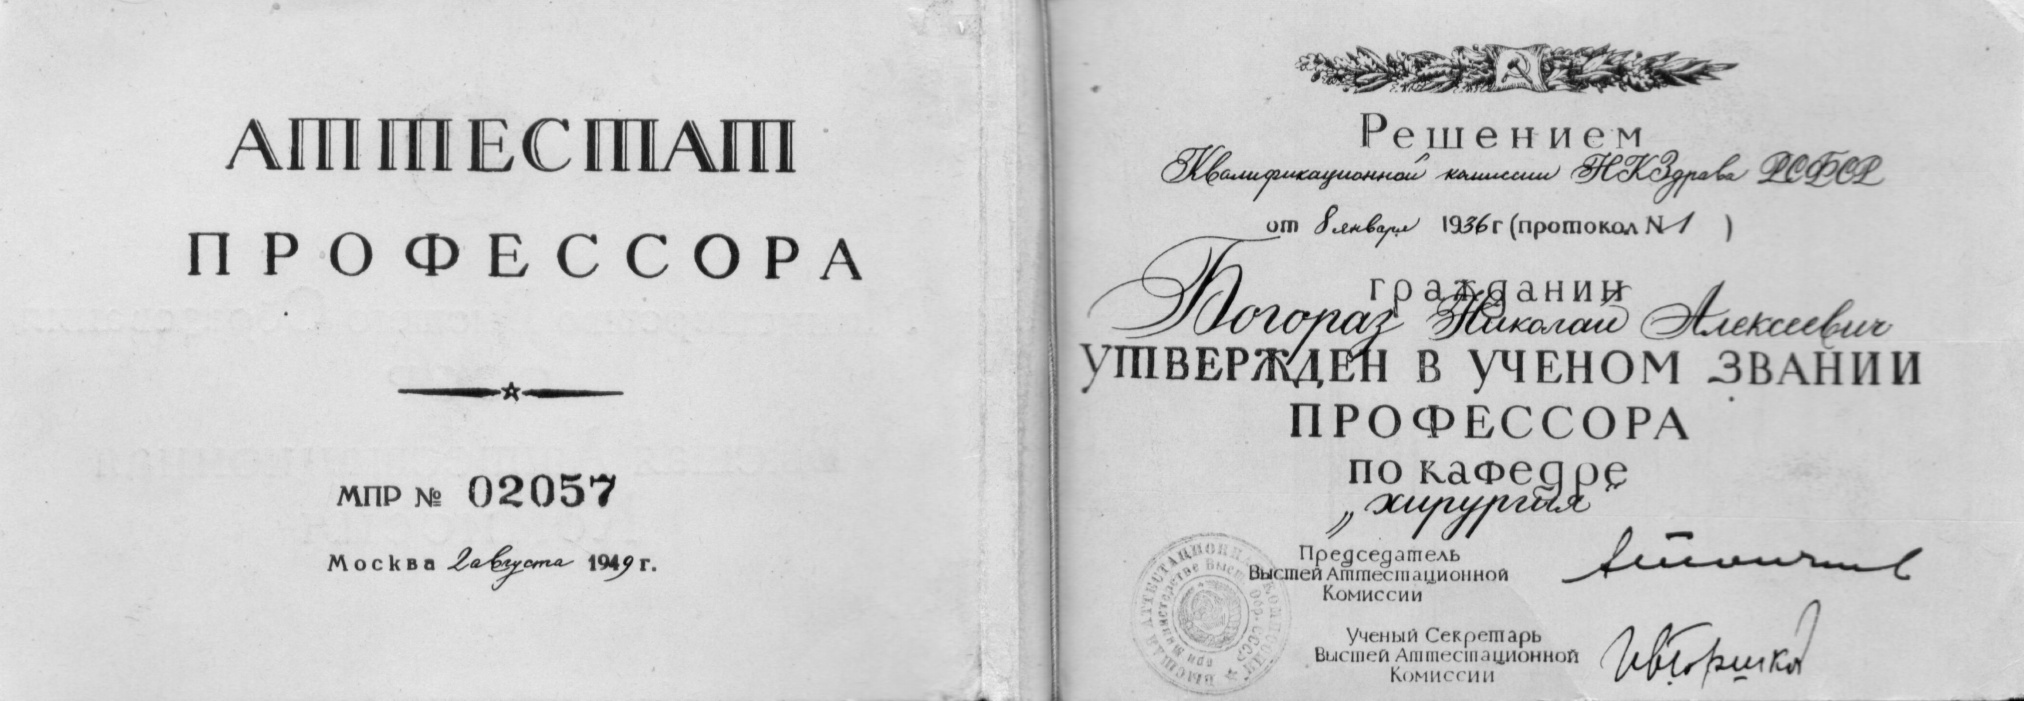 Аттестат профессора Богораза Н.А. бумага 1949